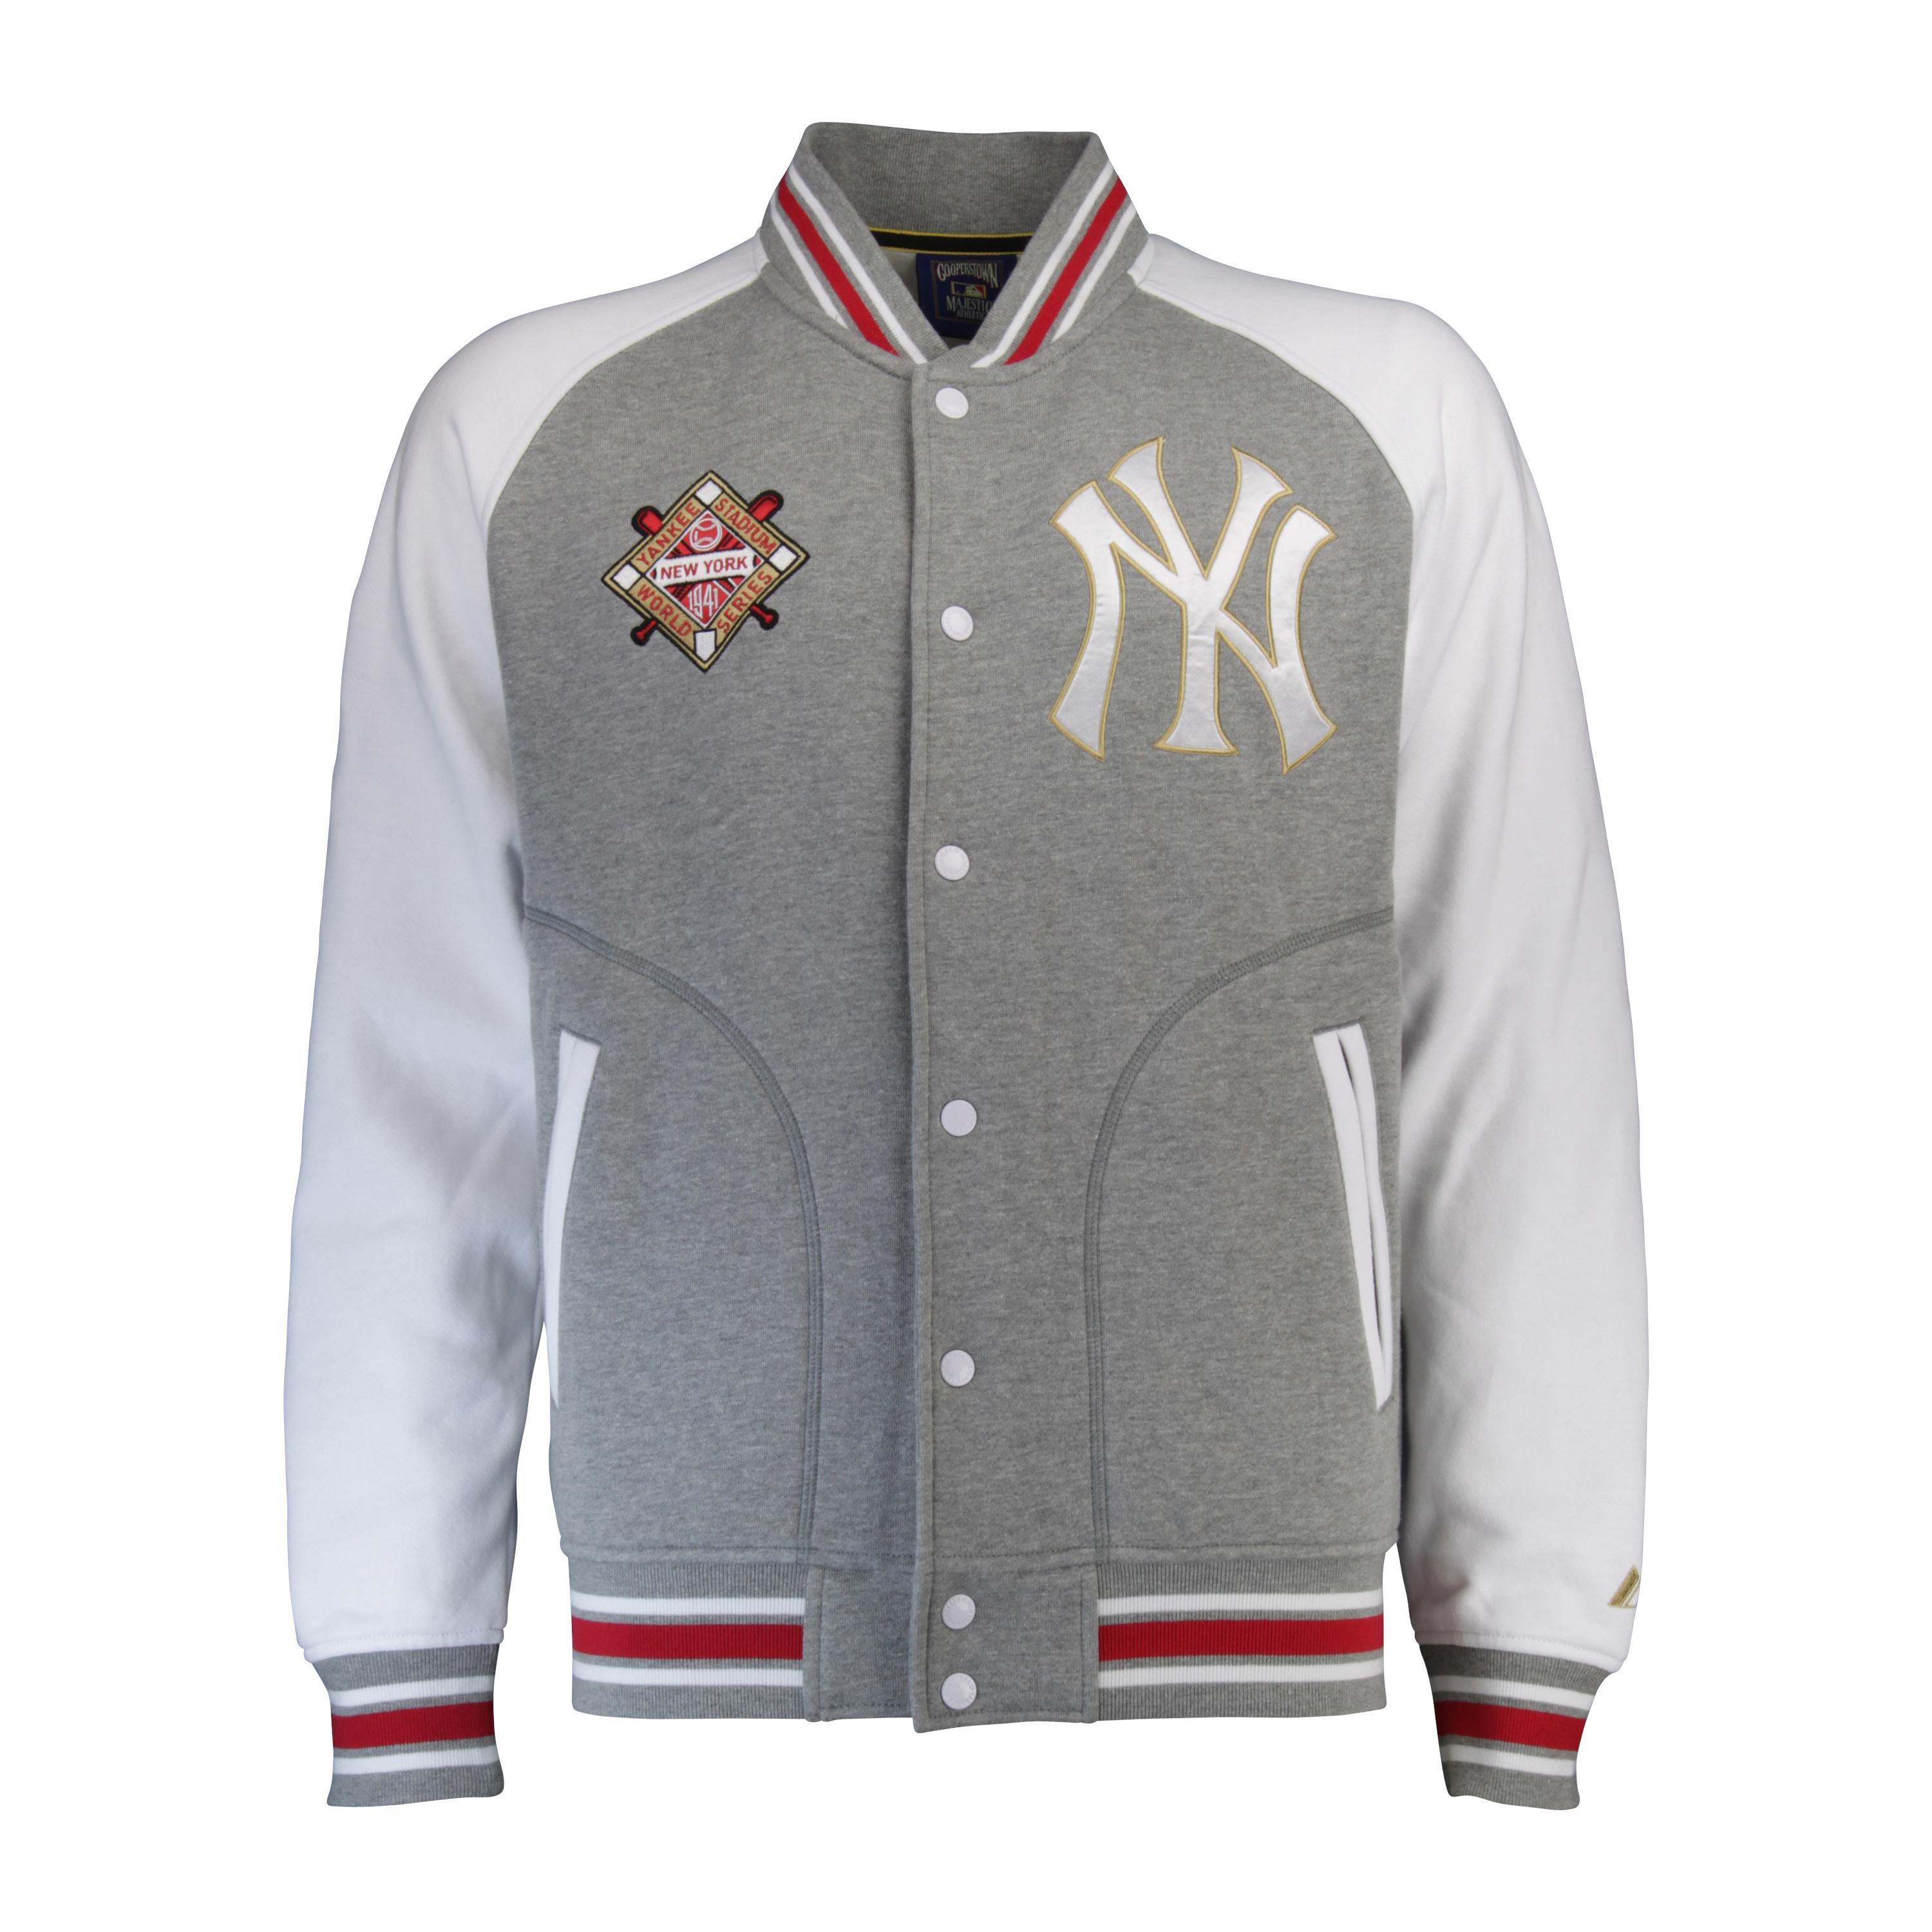 Foto Majestic New York Yankees Fleece Varsity Jacket Exclusiva @ Foot Locker foto 492679